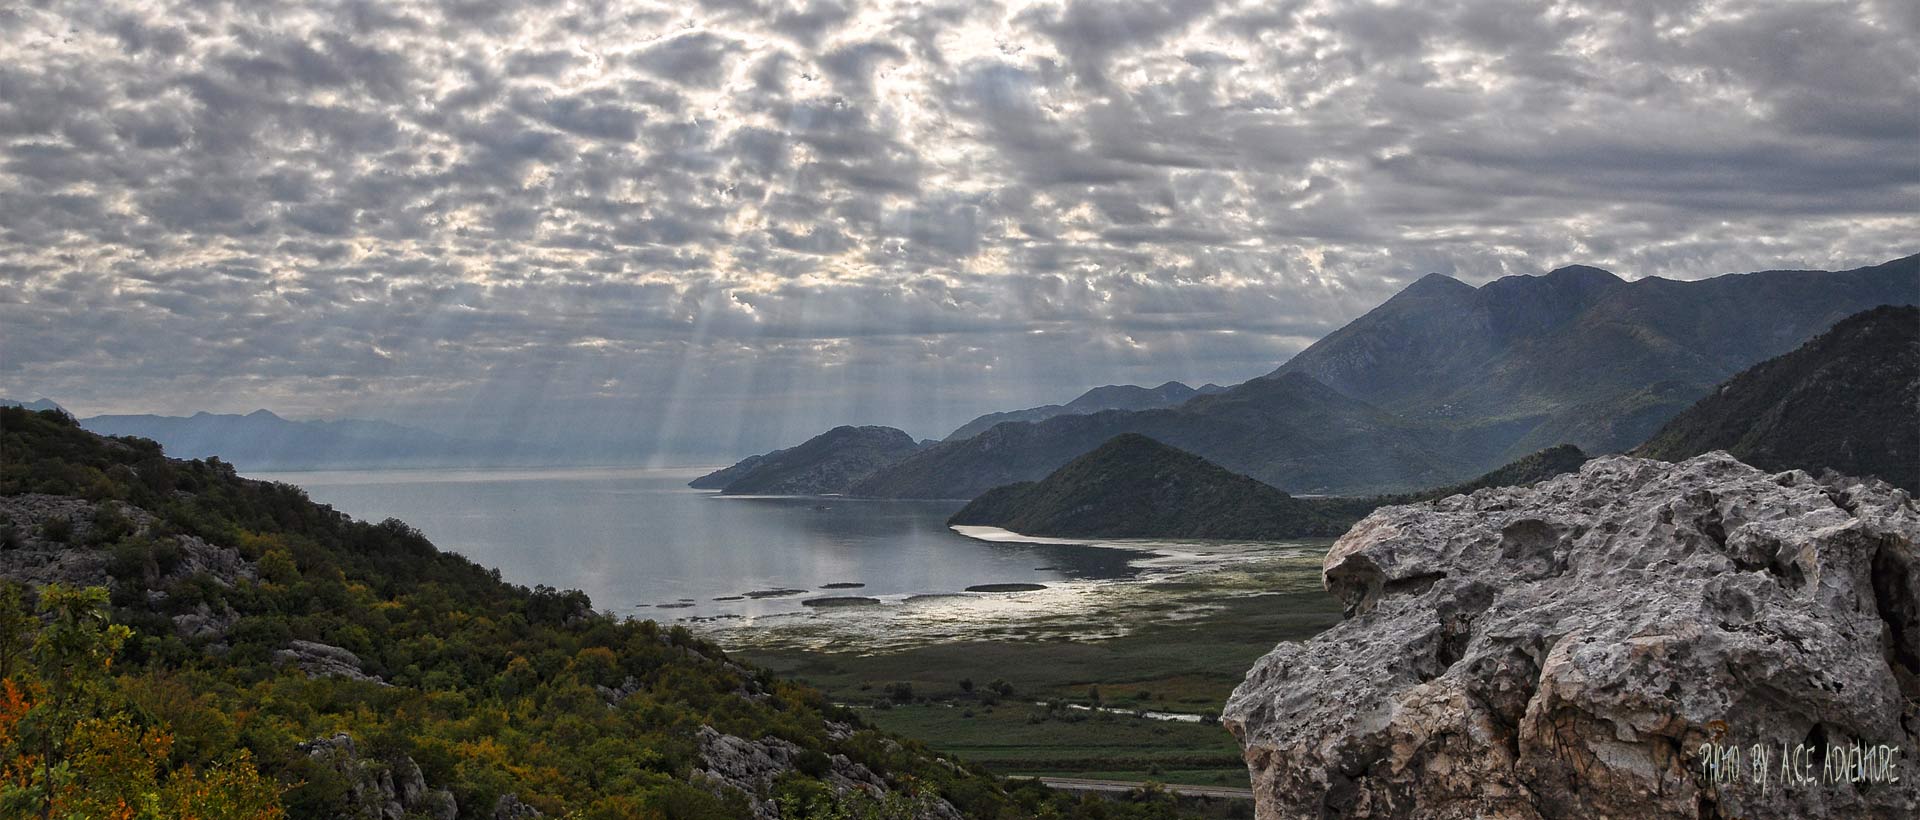 Luxury Family Holiday in Montenegro - Skadar lake landscape